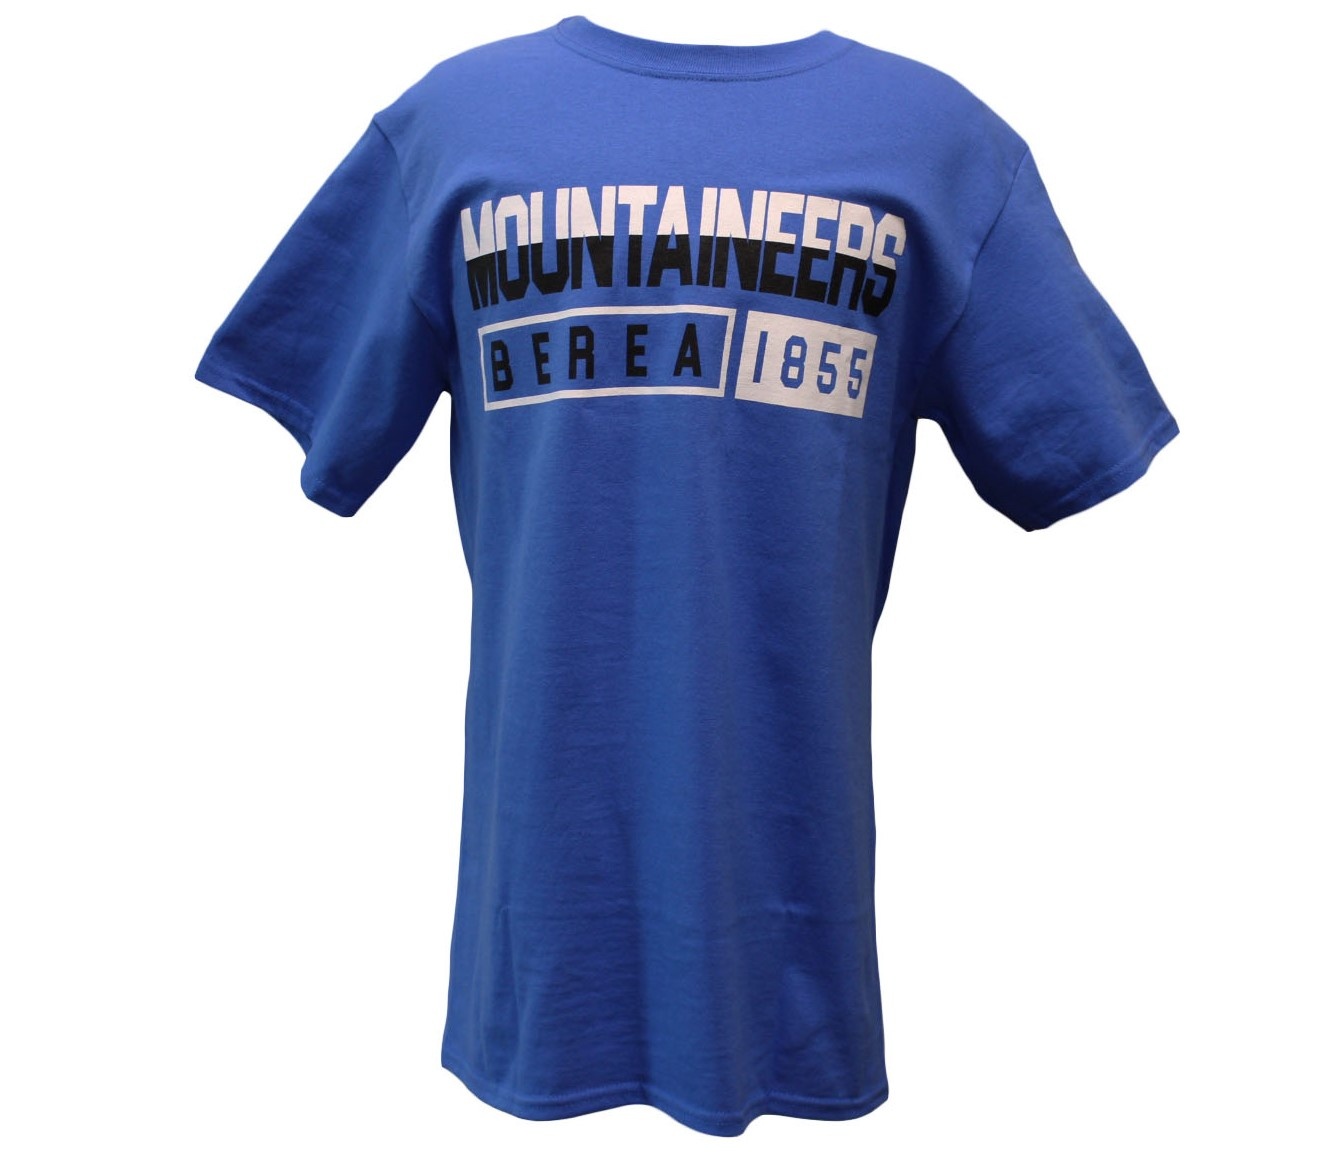 Mountaineers Berea 1855 T-shirt-1